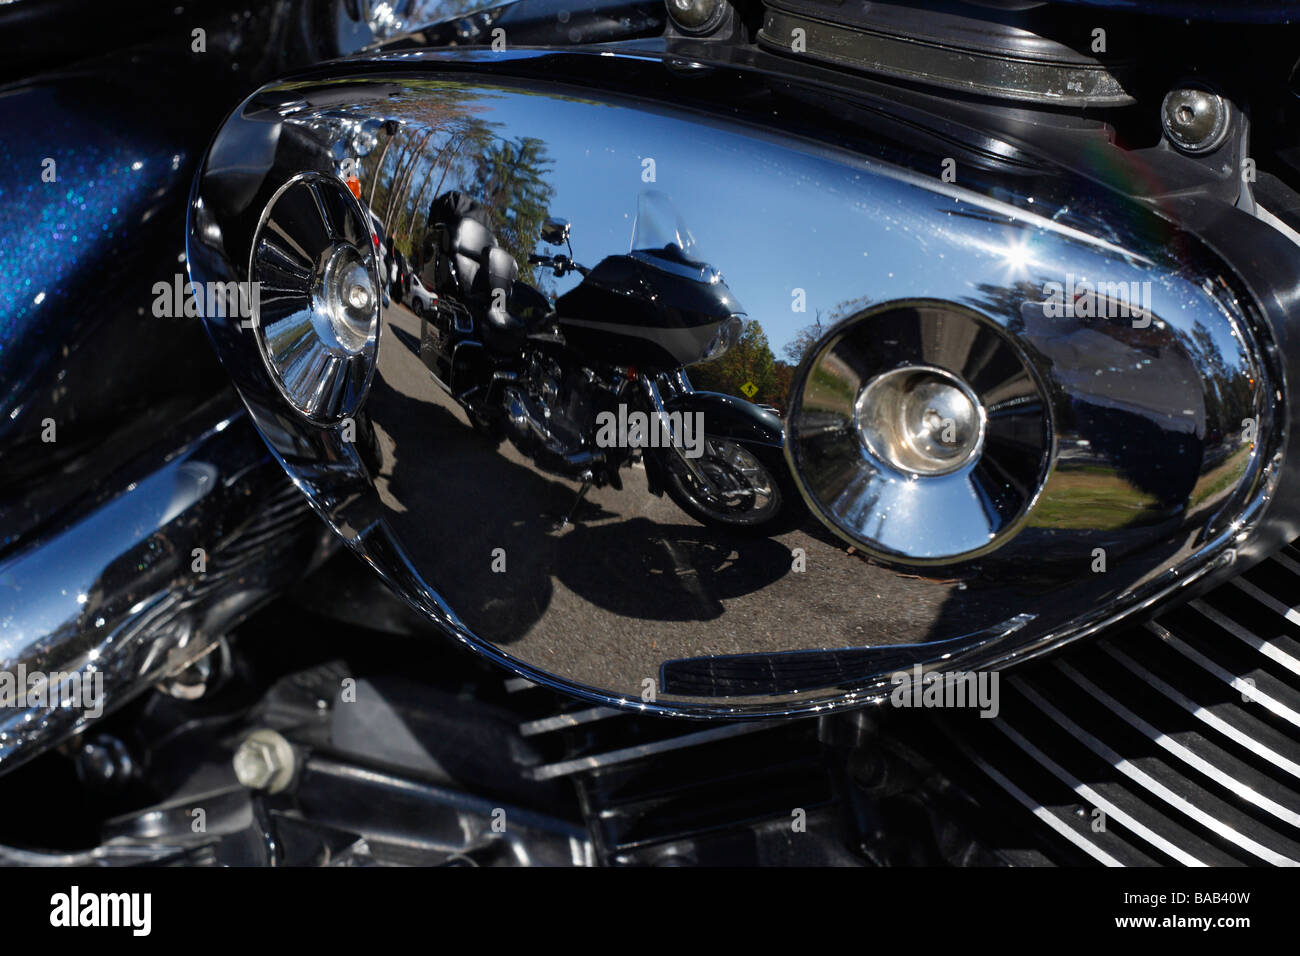 Harley Davidson fuel tank hi-res Stock Photo